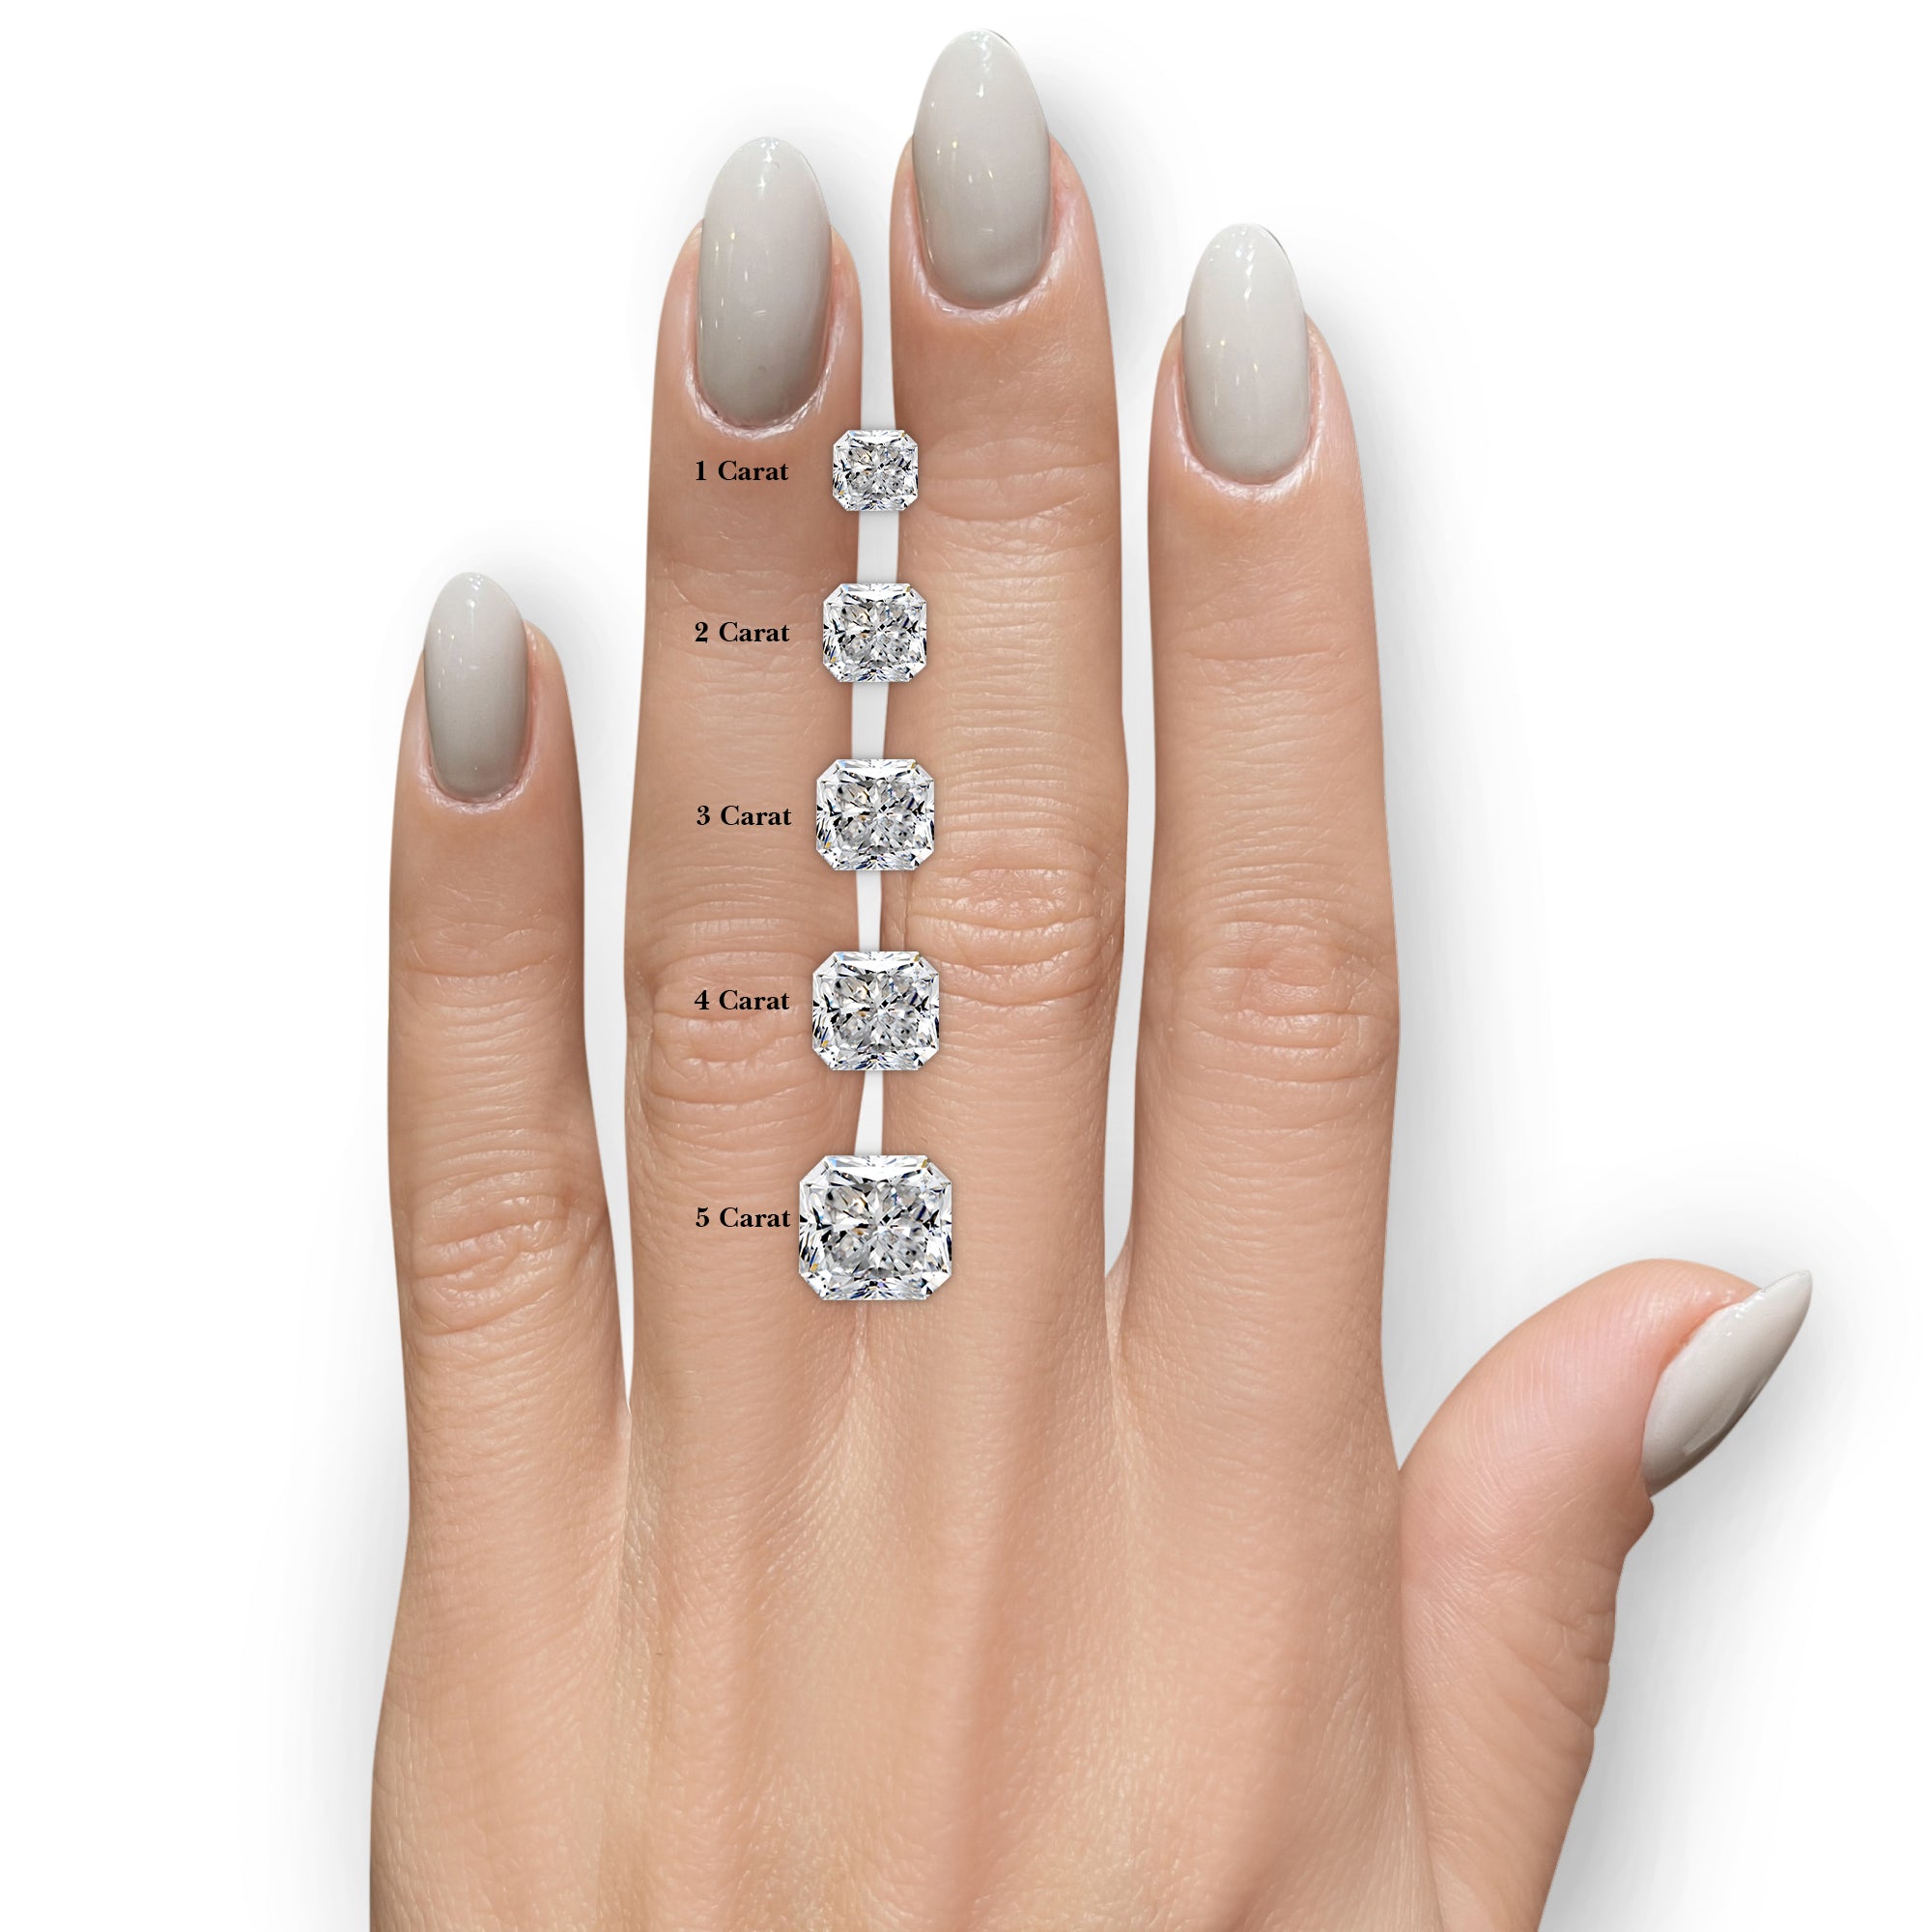 Milly Diamond Engagement Ring -18K White Gold